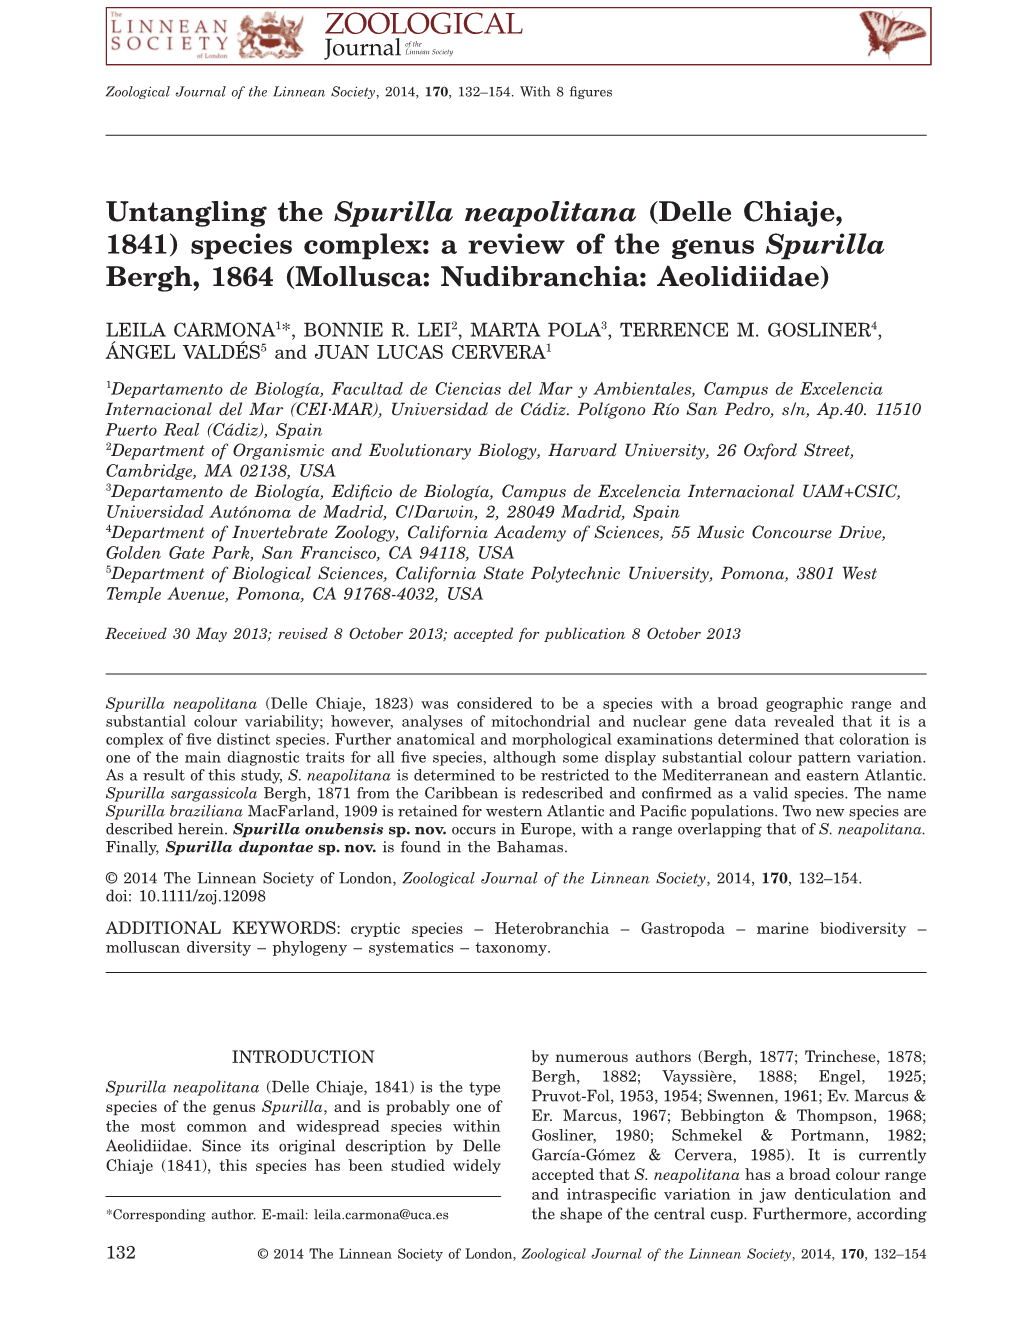 Untangling the Spurilla Neapolitana (Delle Chiaje, 1841) Species Complex: a Review of the Genus Spurilla Bergh, 1864 (Mollusca: Nudibranchia: Aeolidiidae)